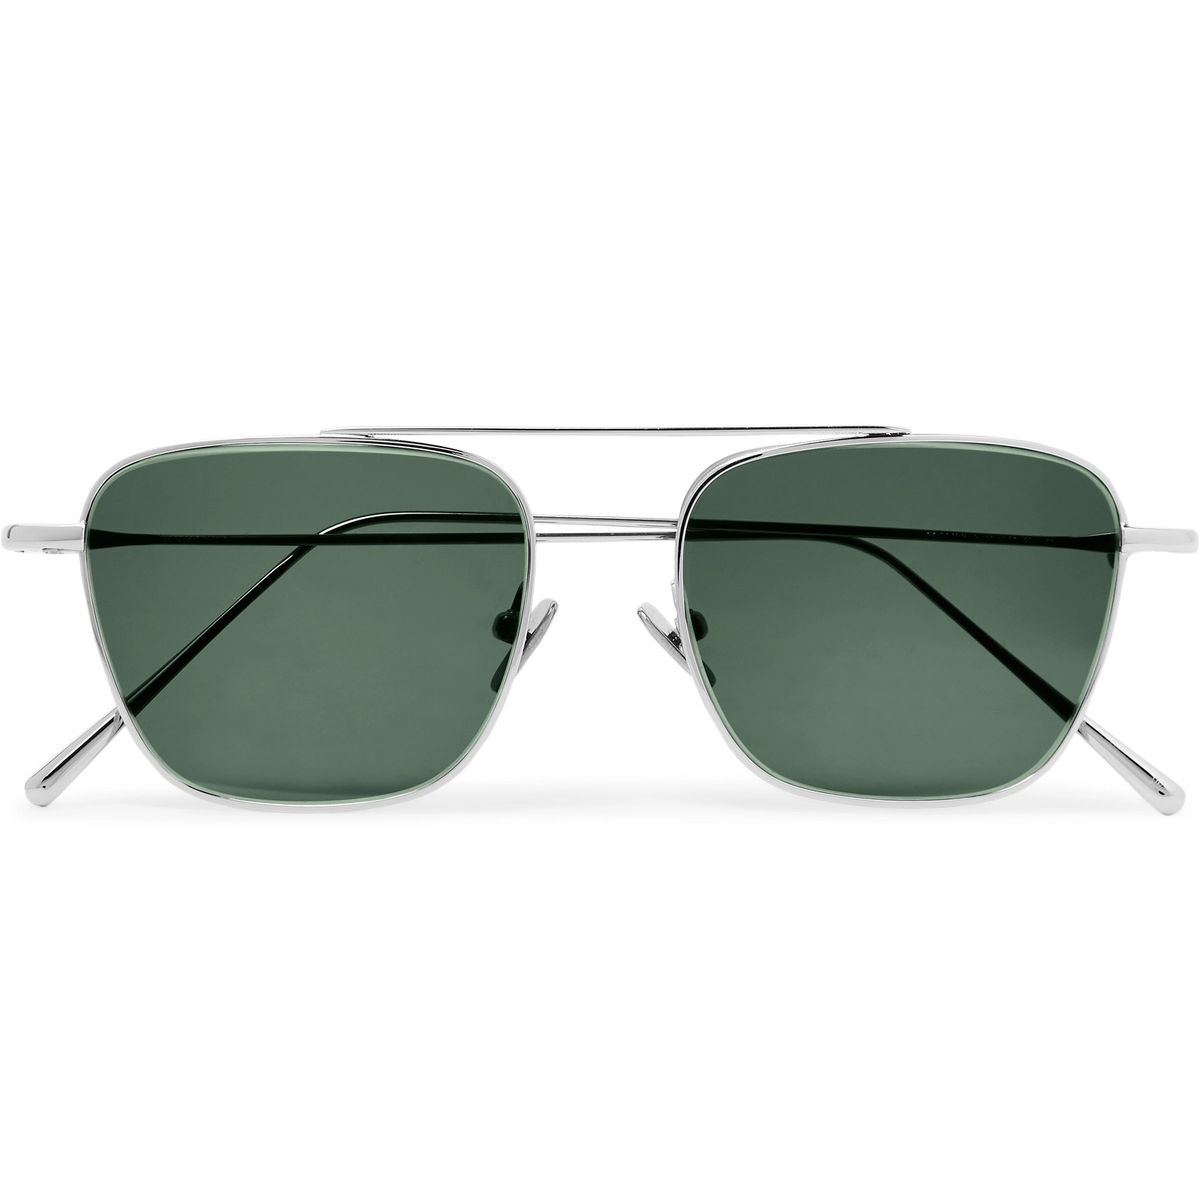 13 Cheap Sunglasses for Men 2019 | The